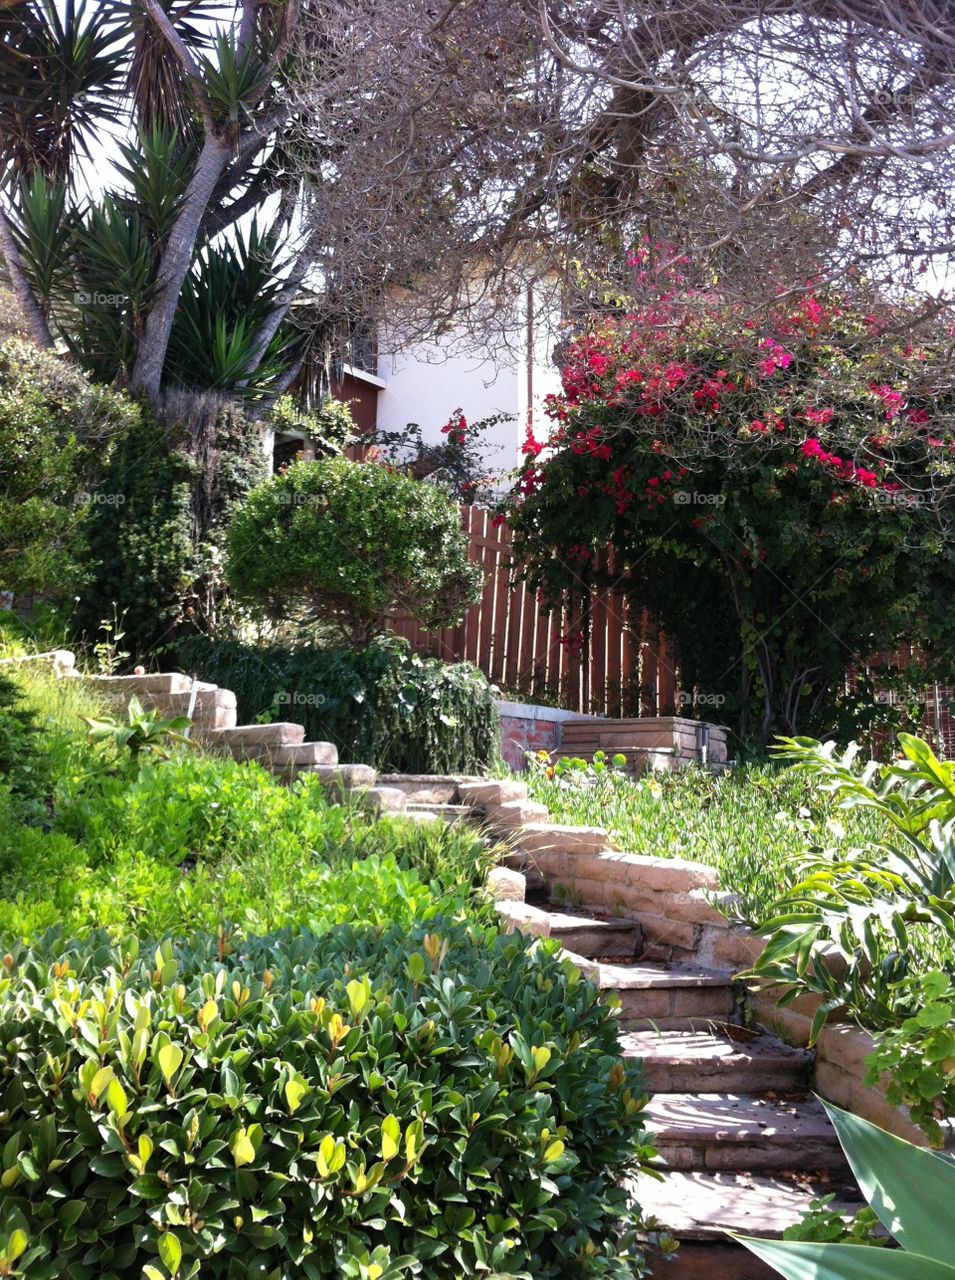 Garden in Malibu . A beautiful garden at one of the fancy homes in Malibu, CA.